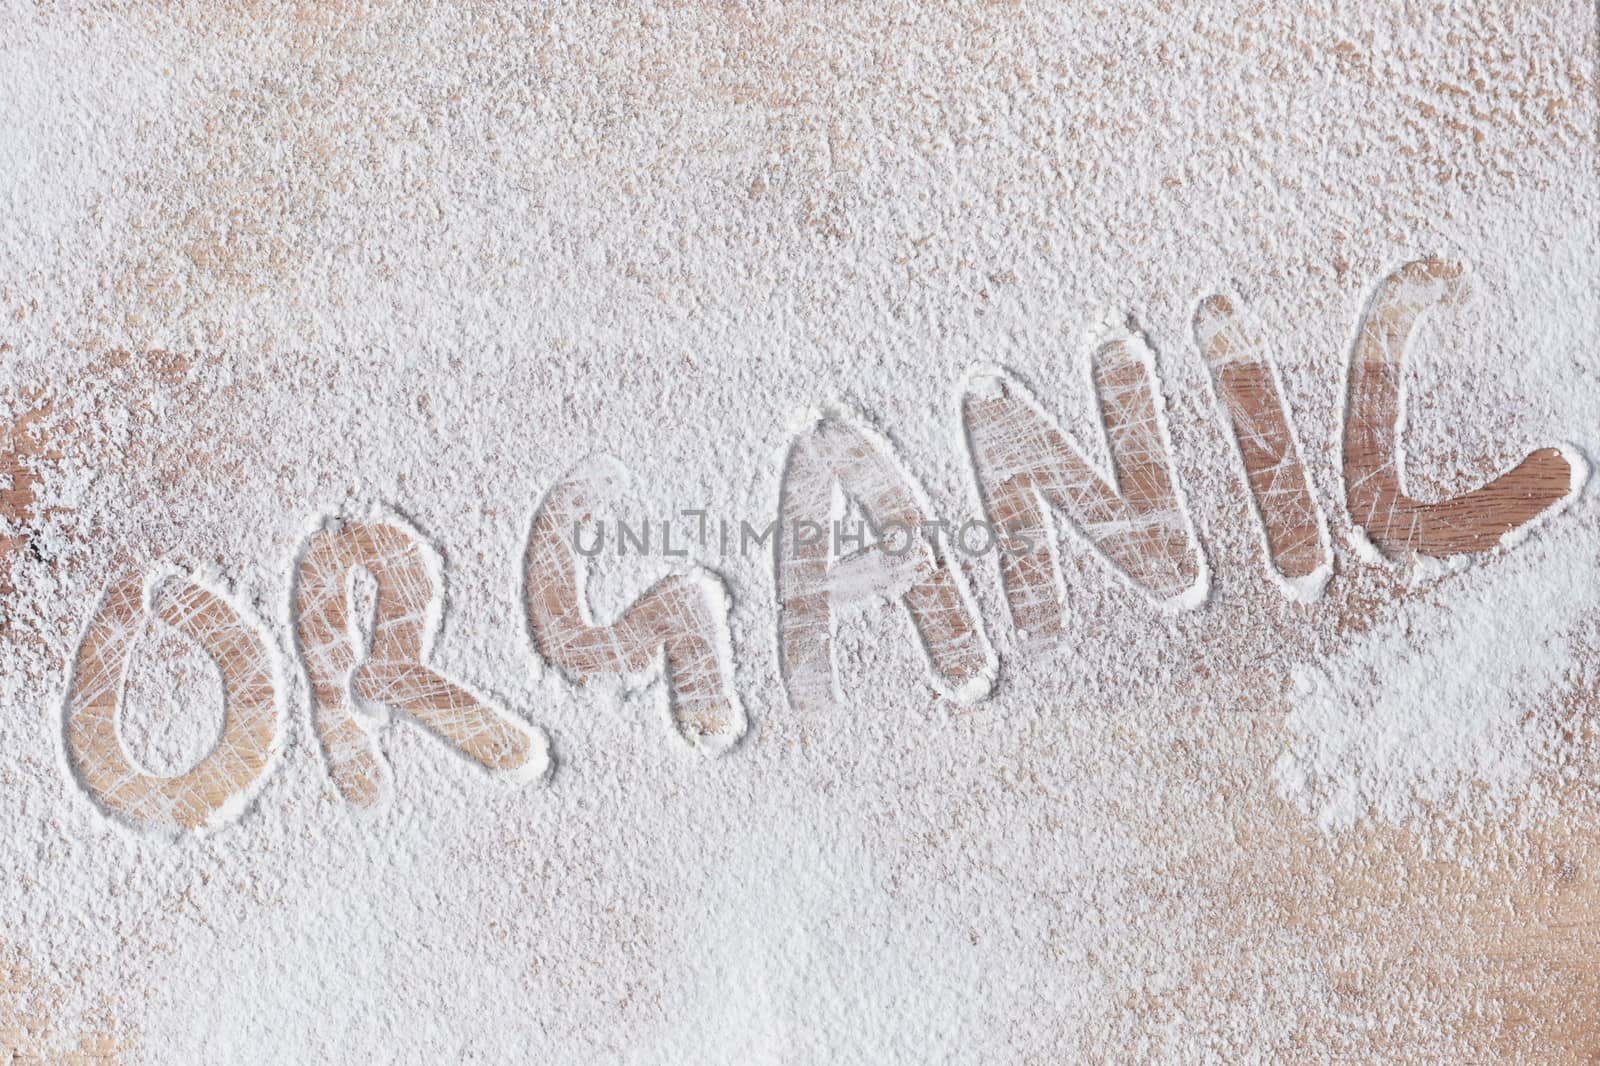 Organic written in flour on a wooden surface